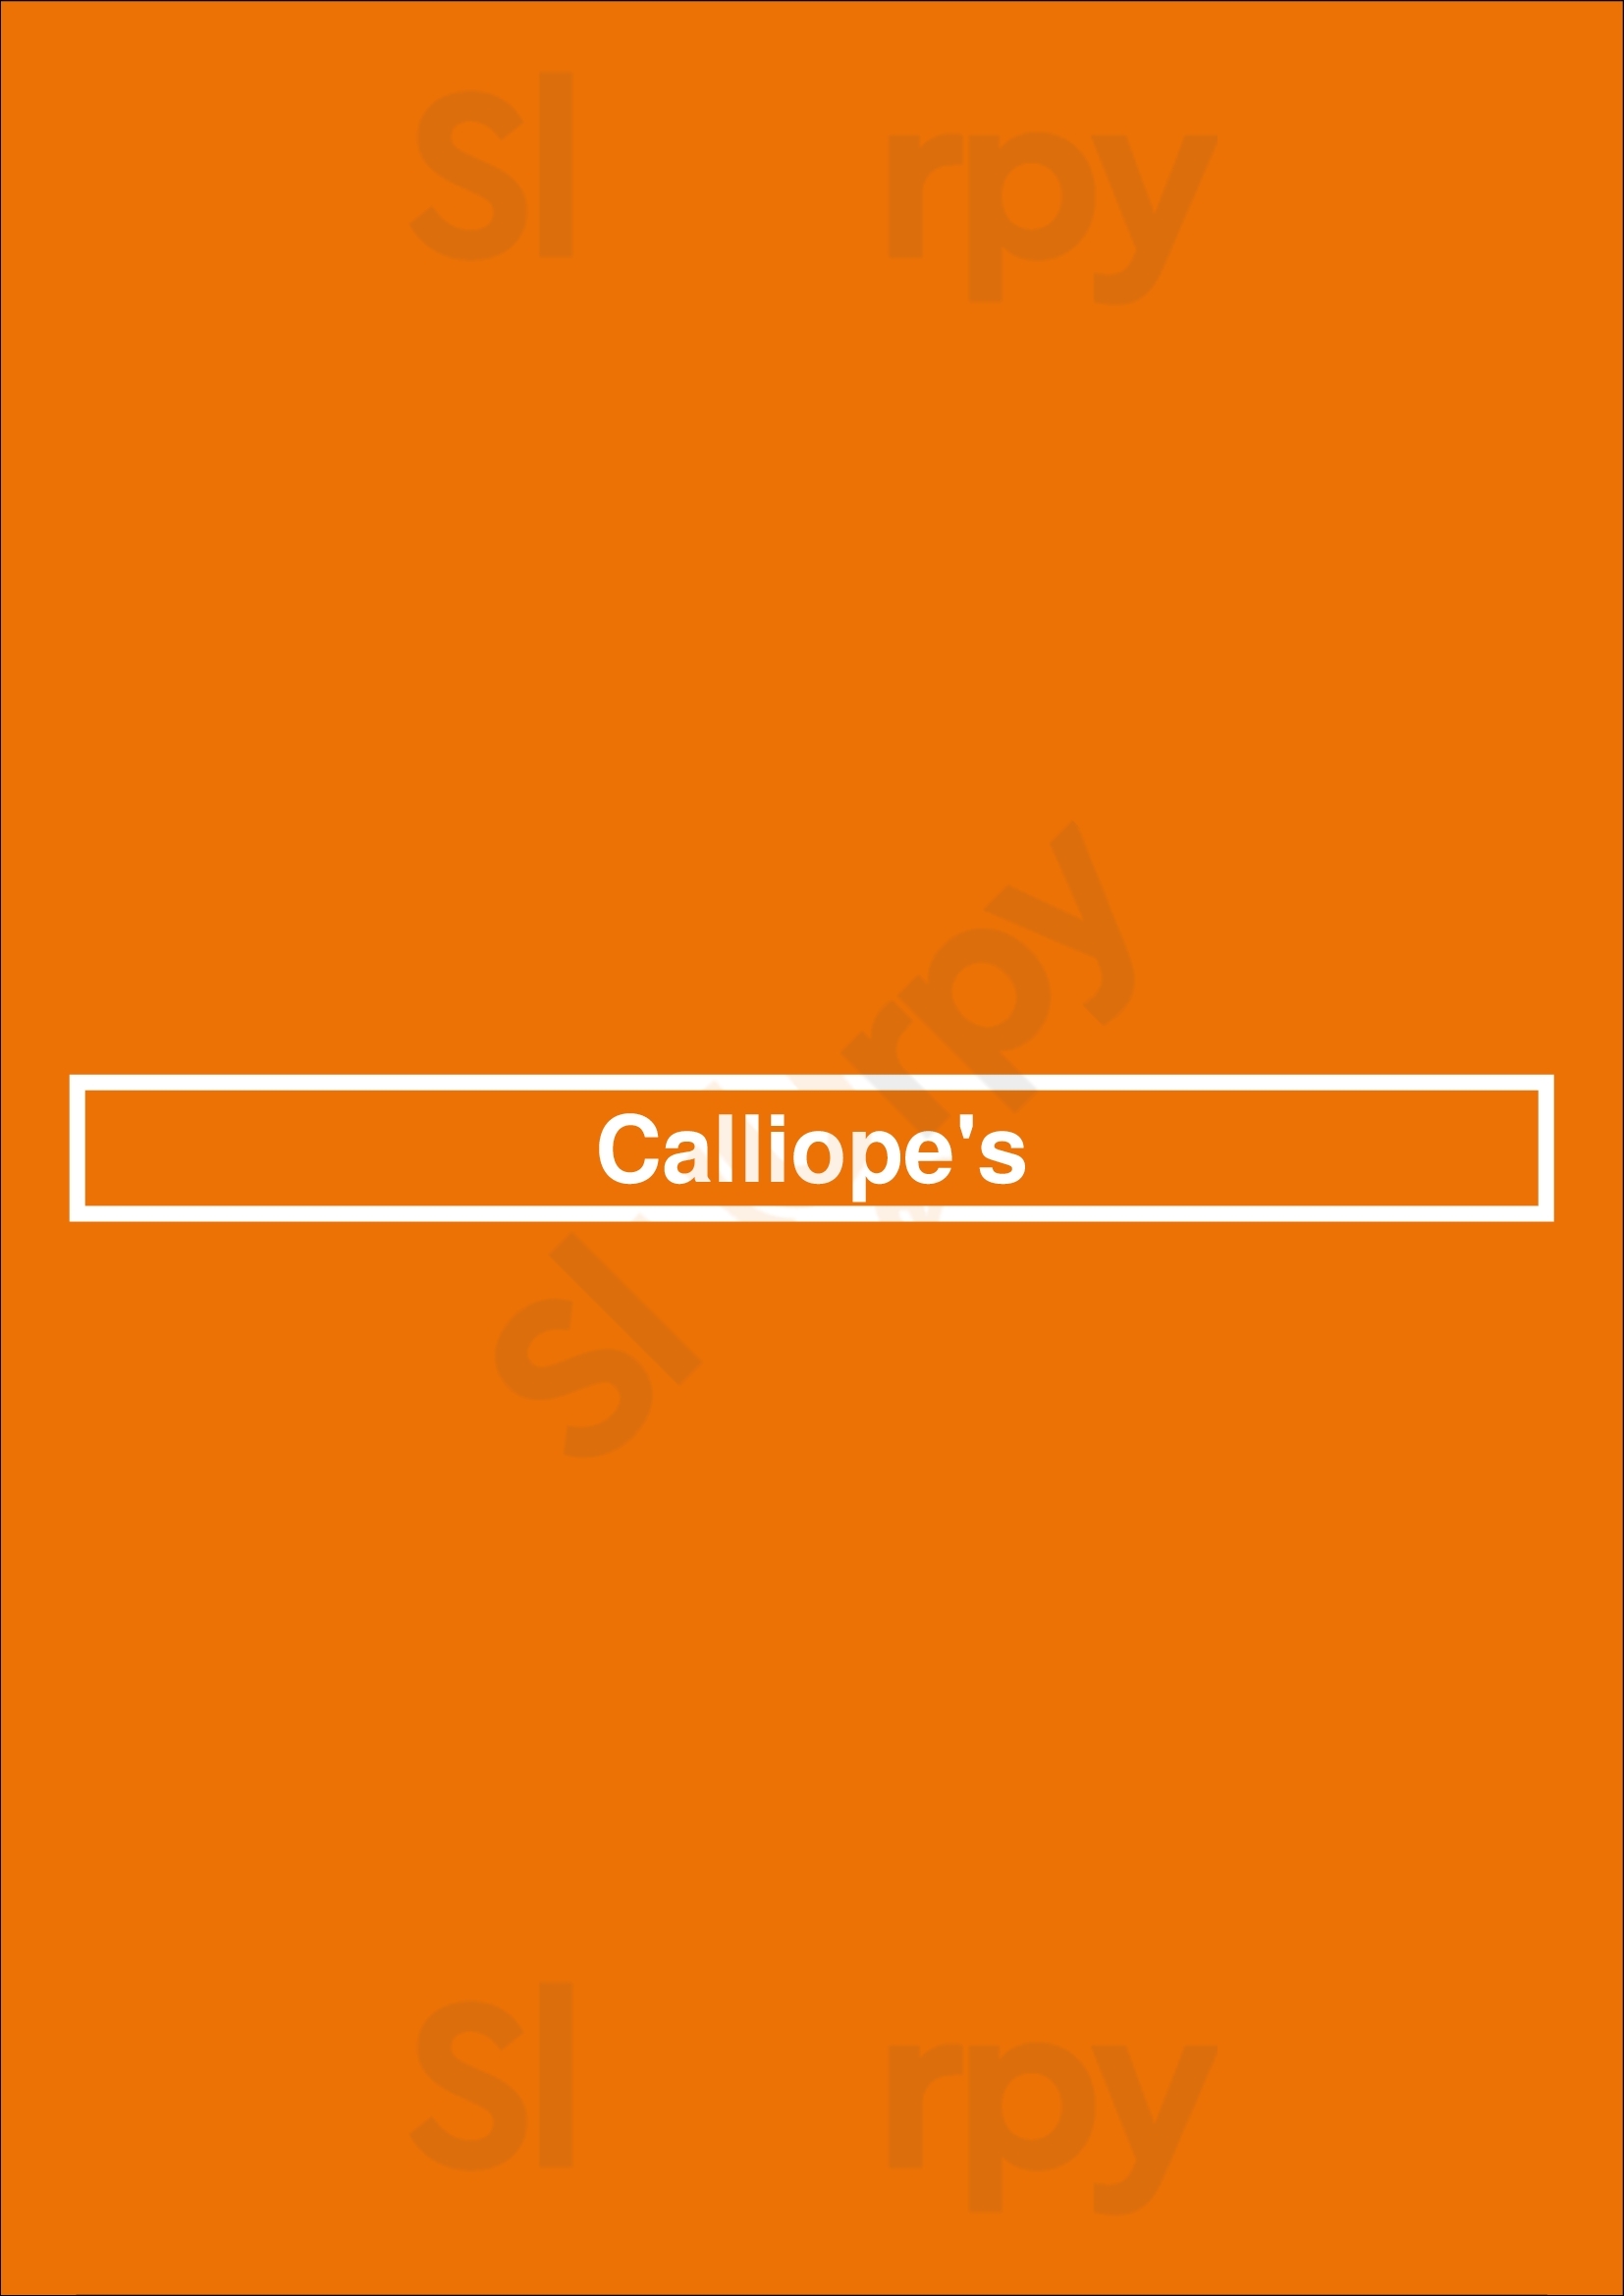 Calliope's Houston Menu - 1